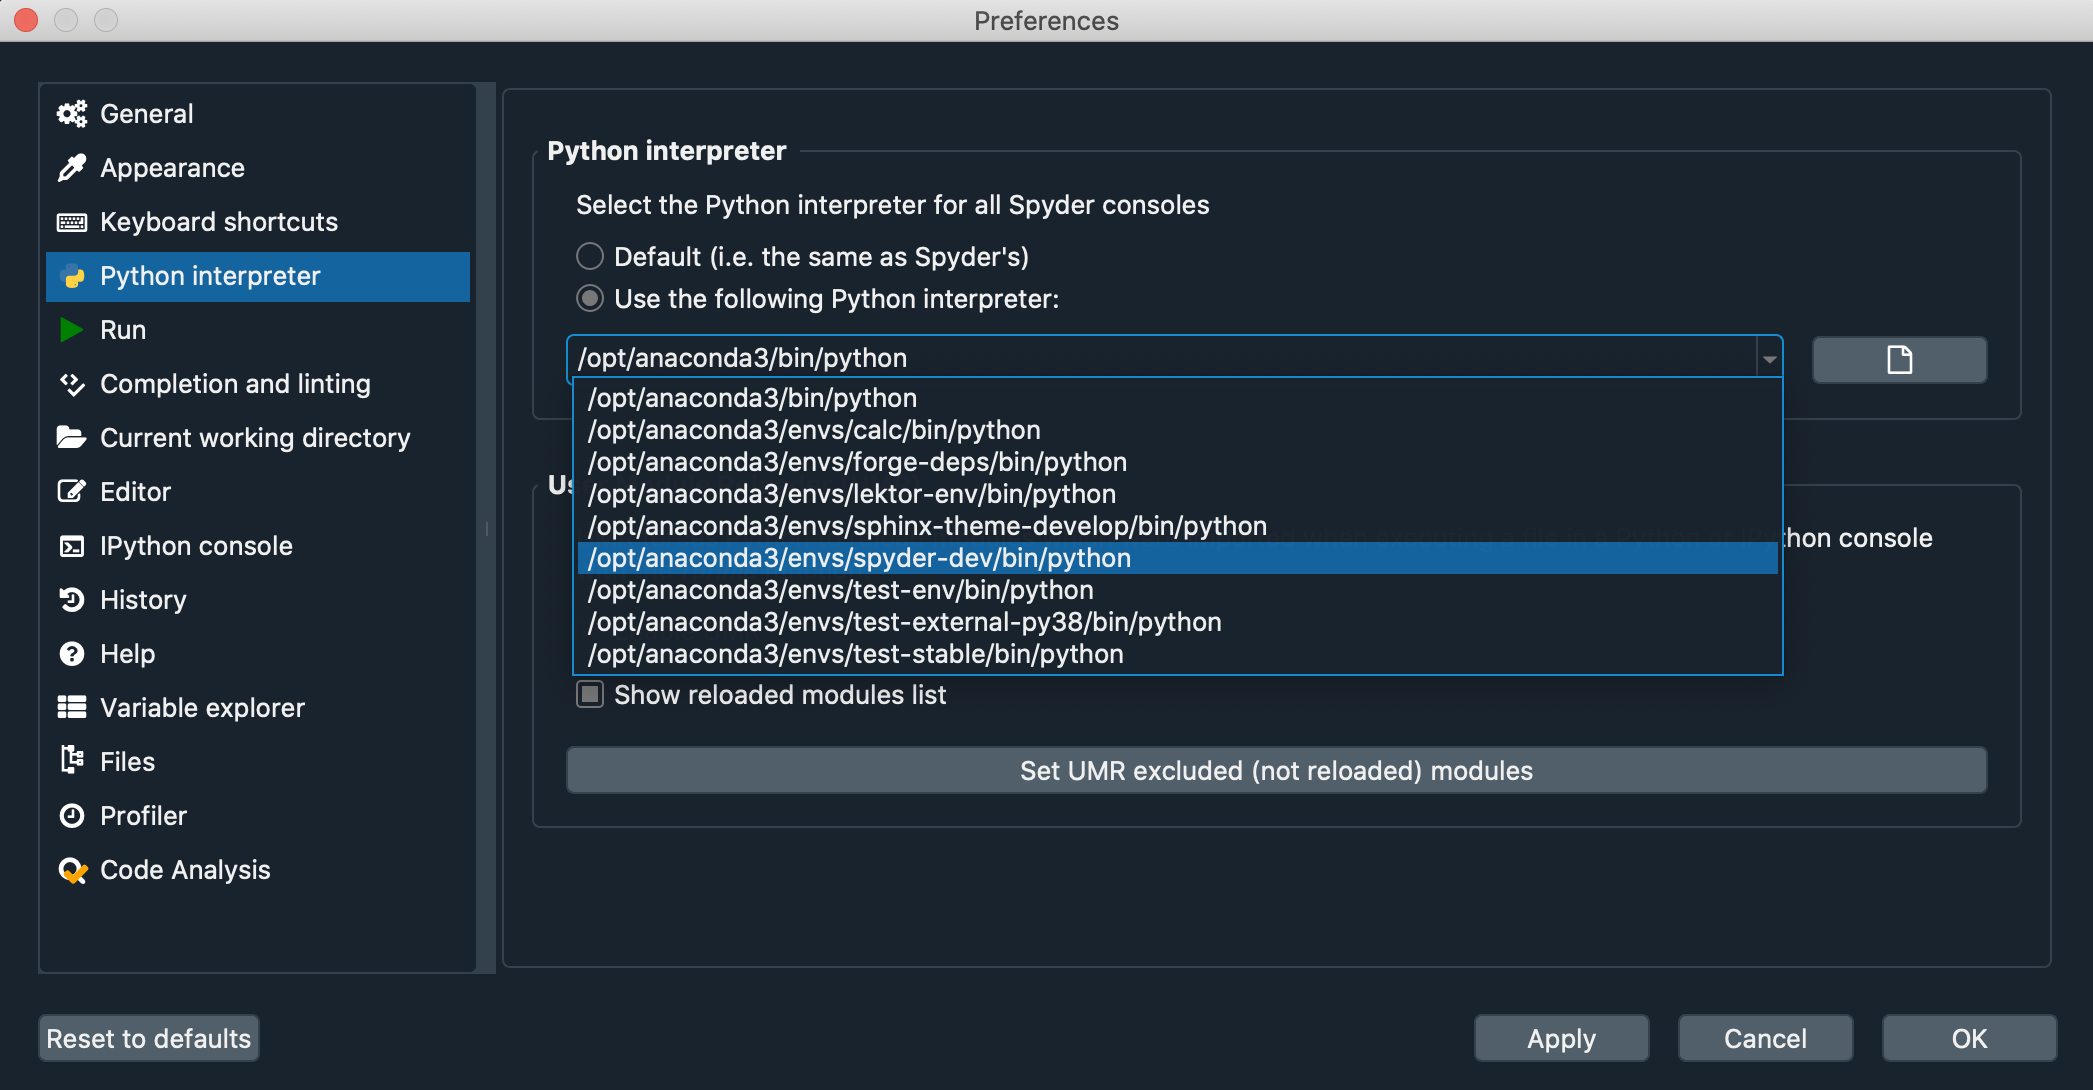 Preferences showing changing Python interpreter